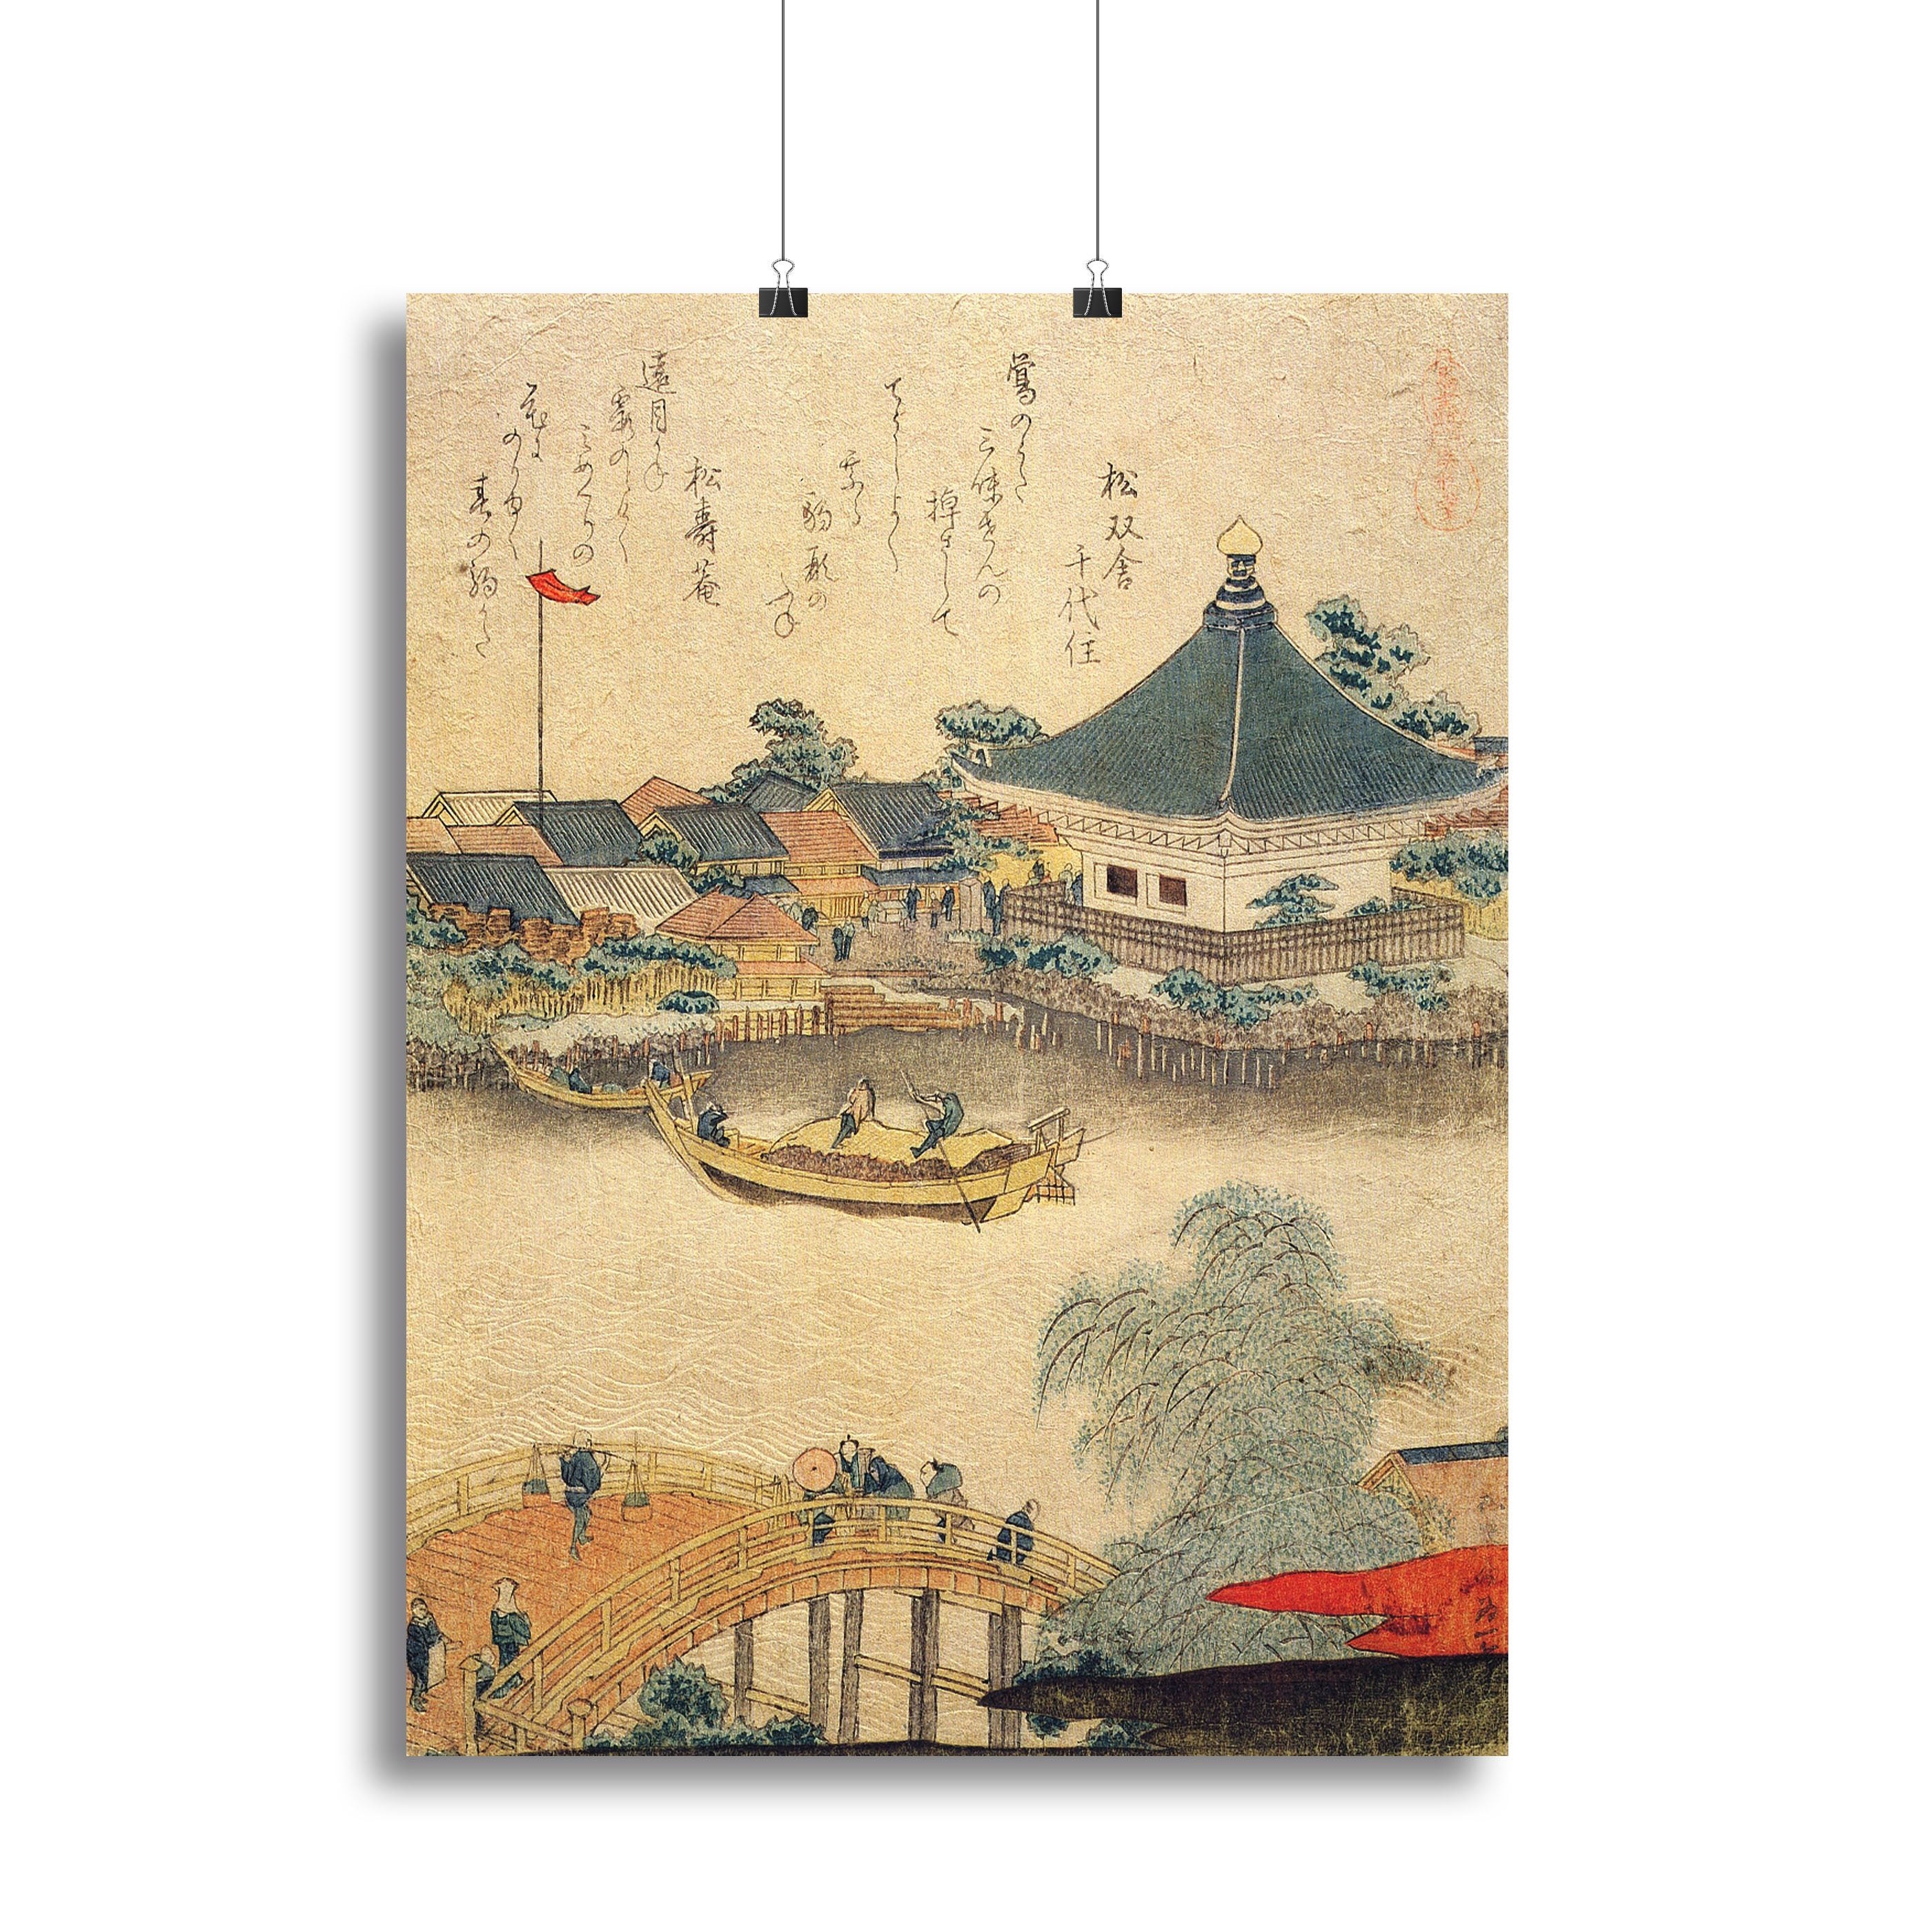 The Shrine Komagata Do in Komagata by Hokusai Canvas Print or Poster